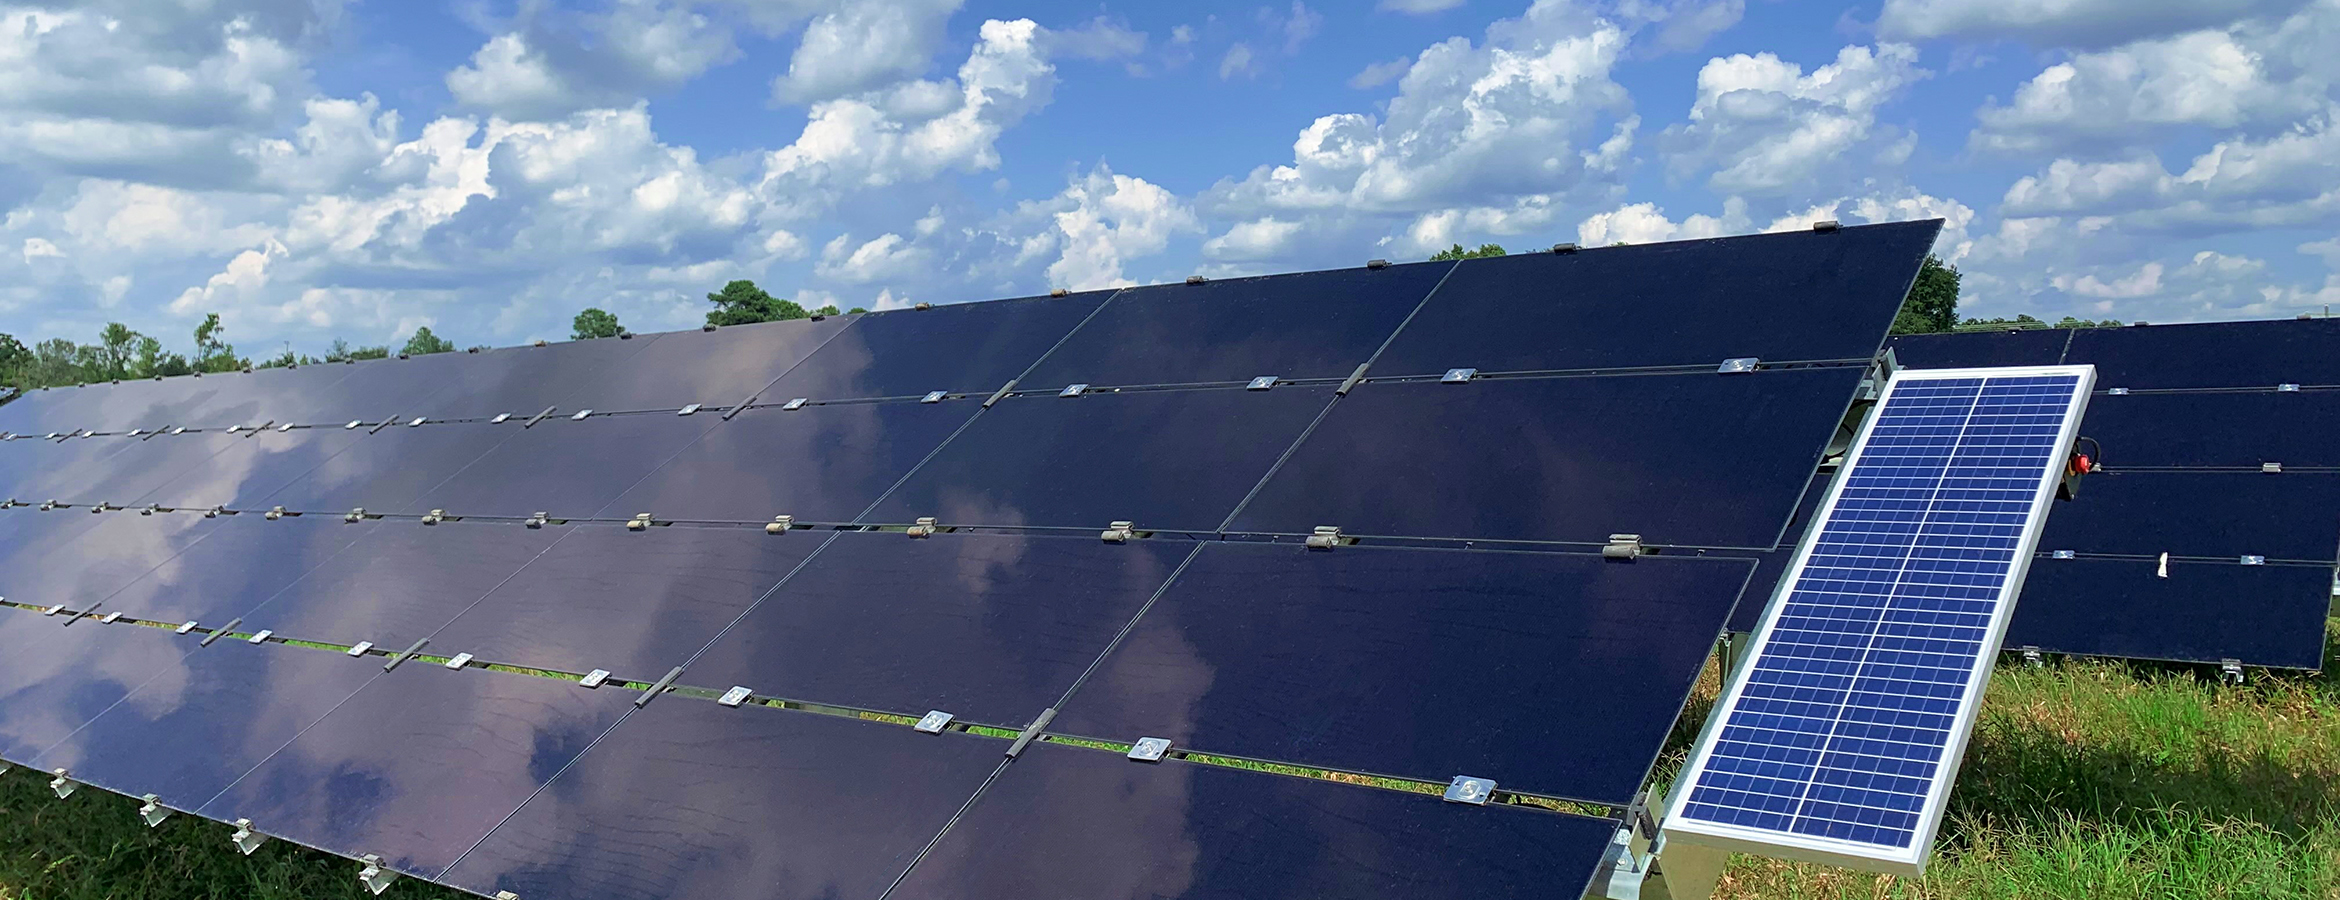 Solar panels and sky in South Carolina